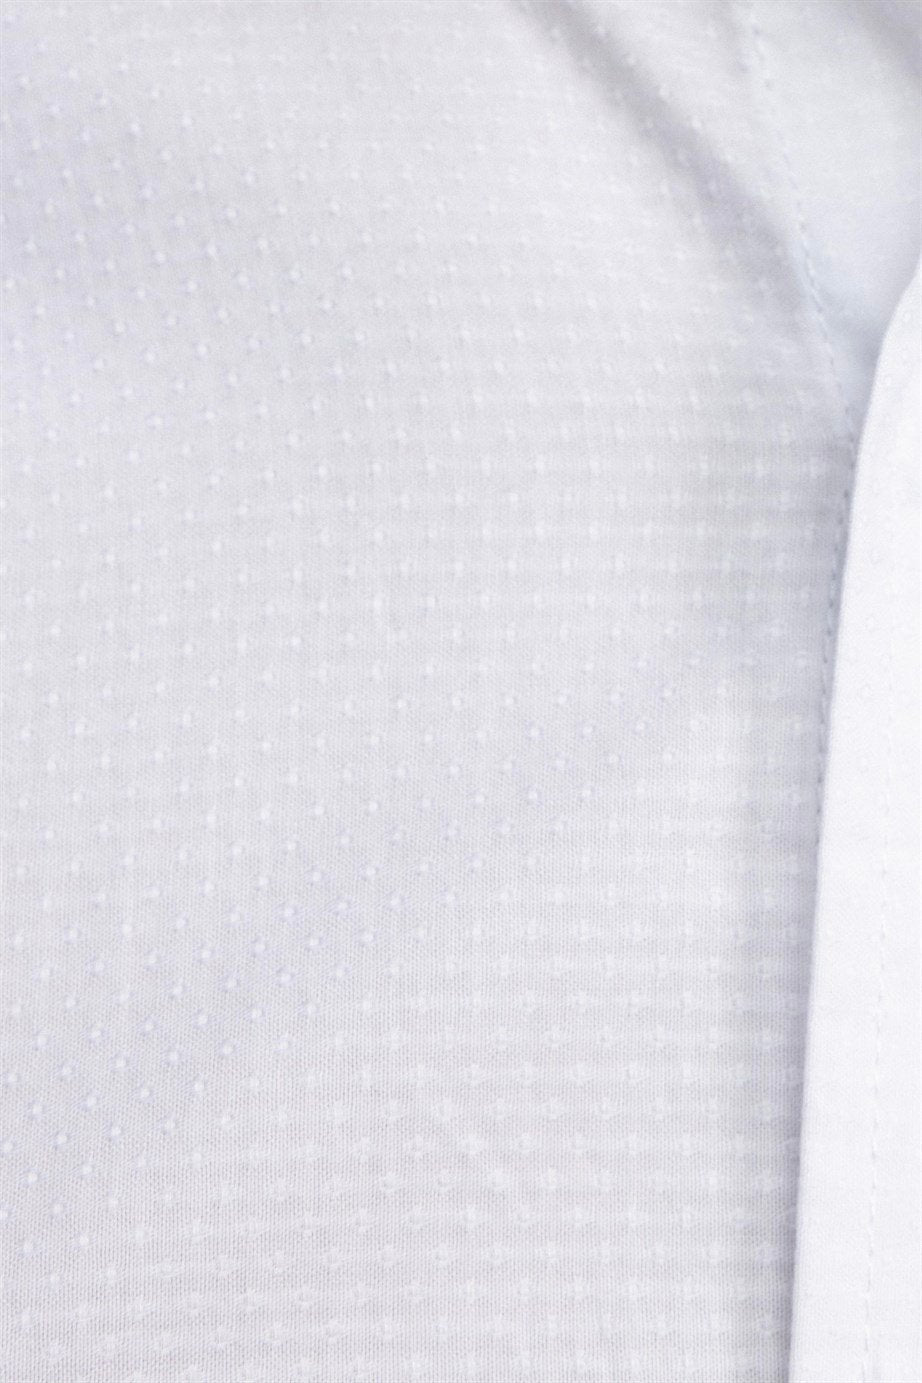 Classic Fit White Long Sleeve Cotton Texture Shirt 99percenthandmade   